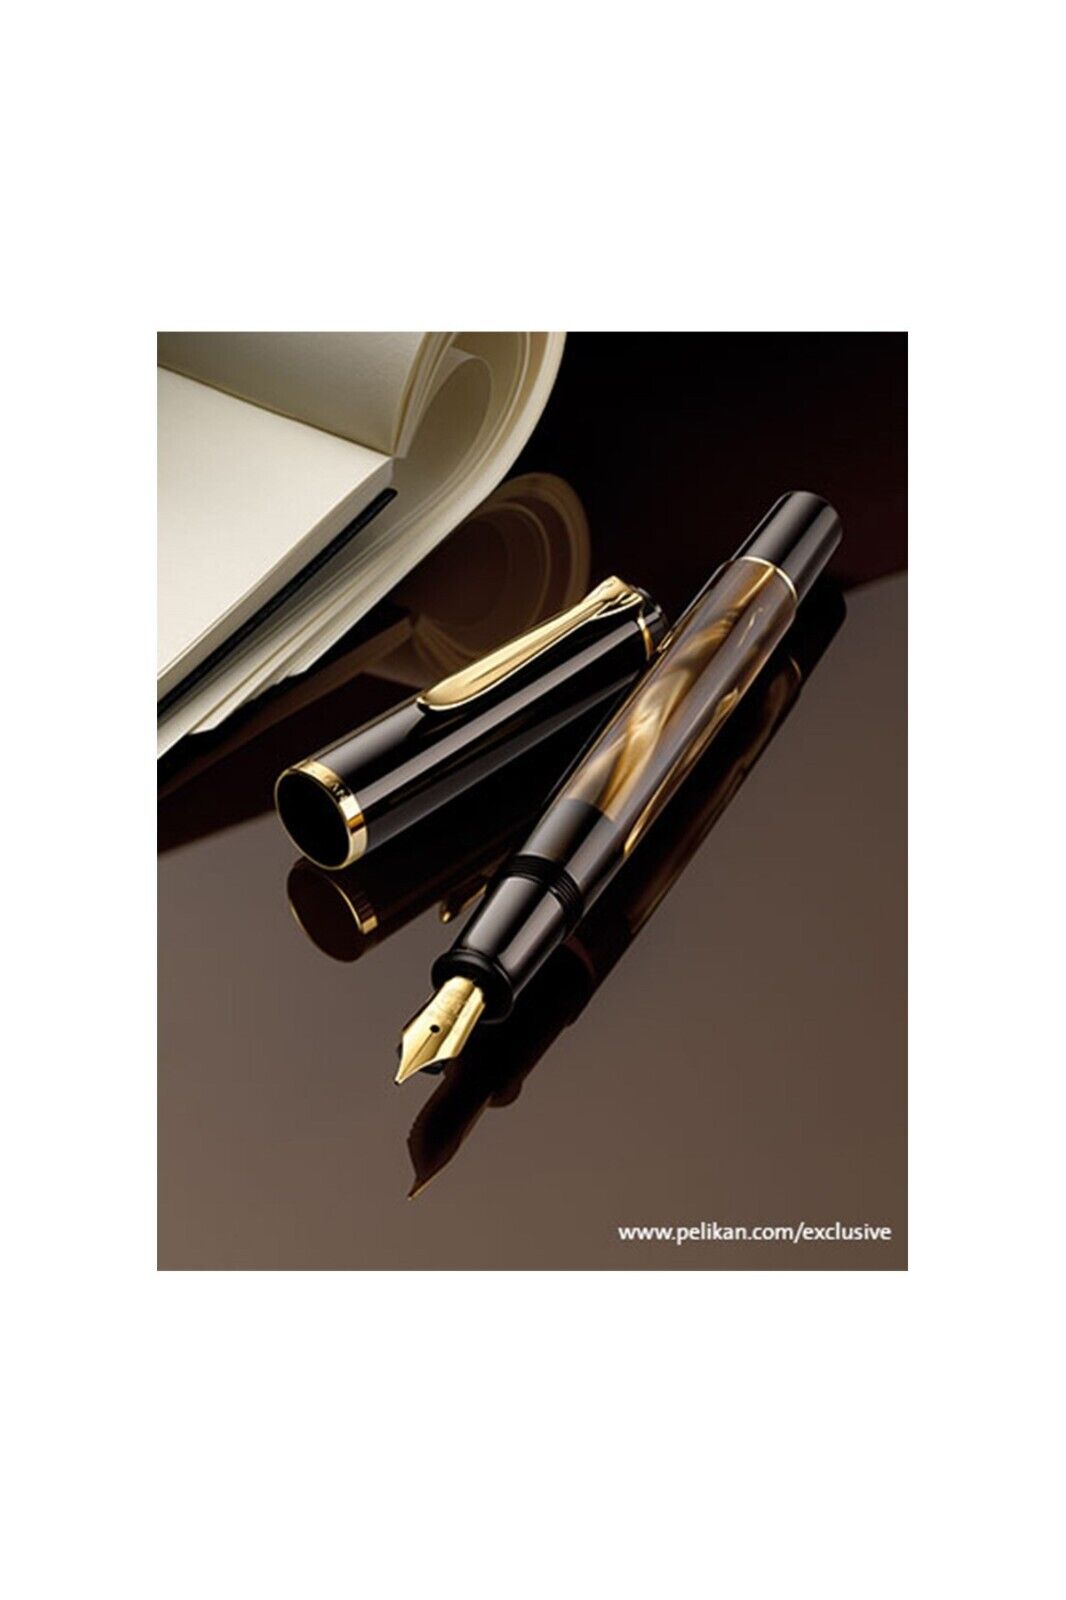 Pelikan Fountain pen Classic M200 Brown-Marbled -F Nib